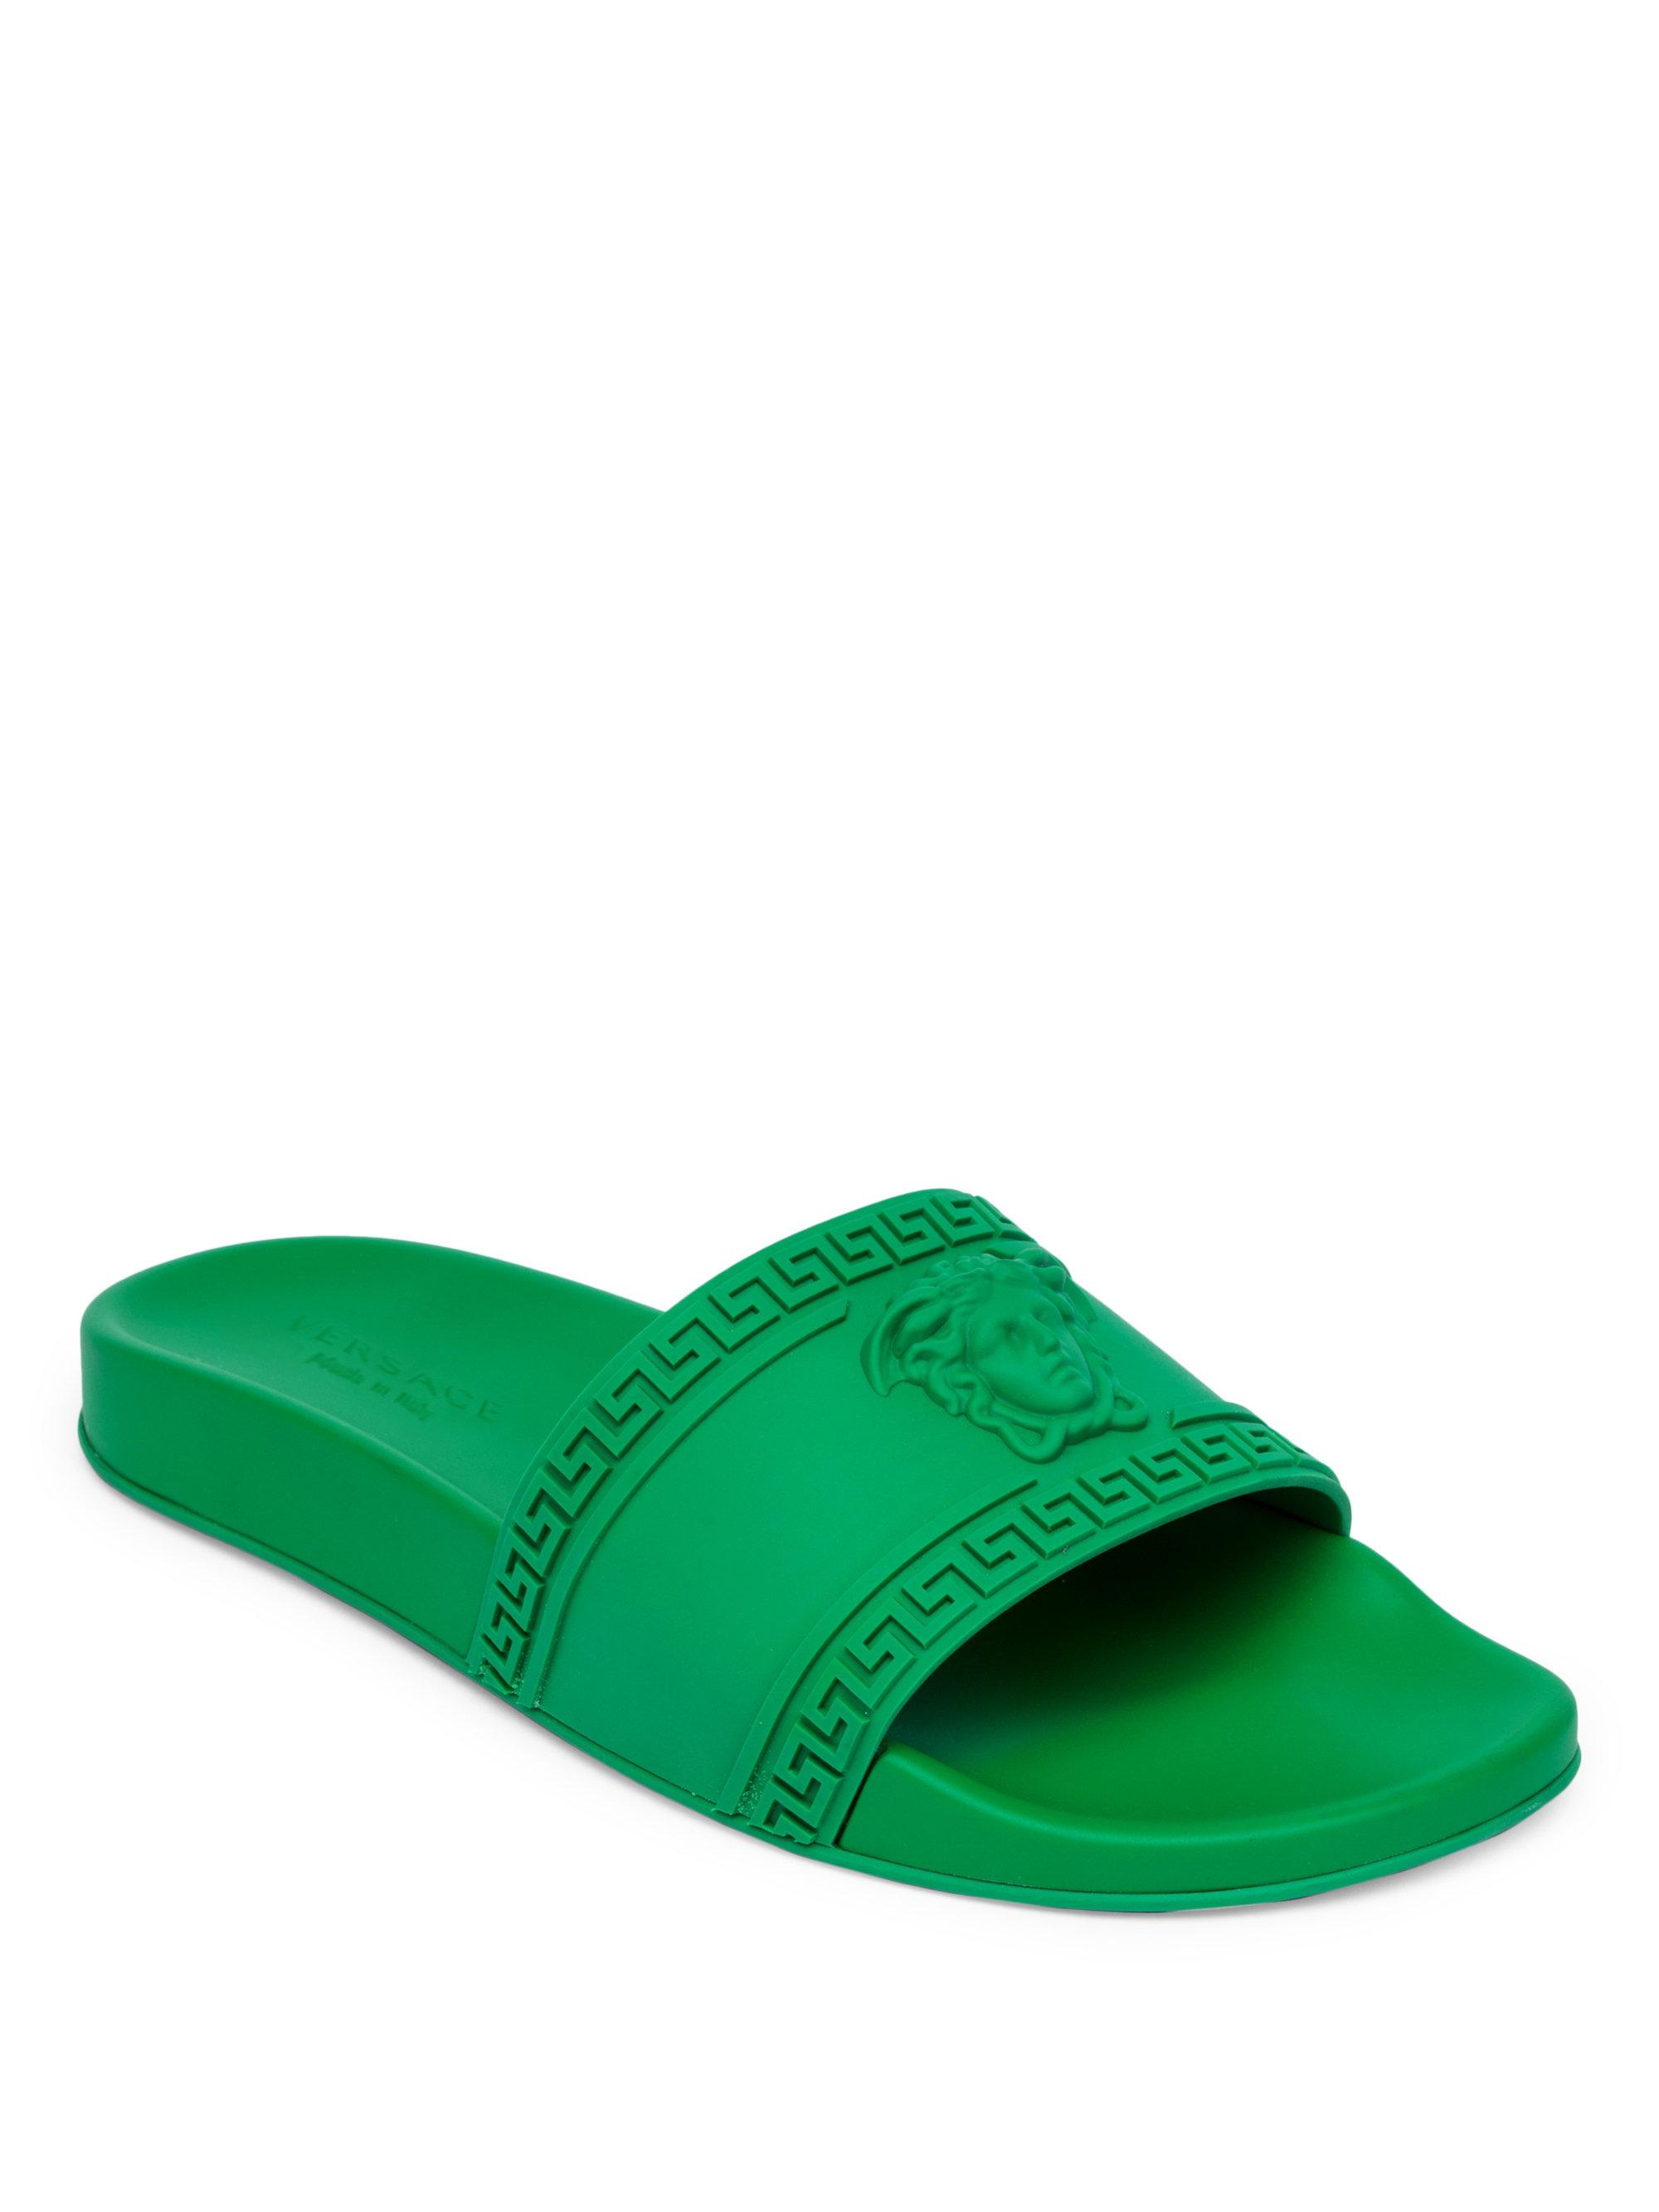 green versace slides